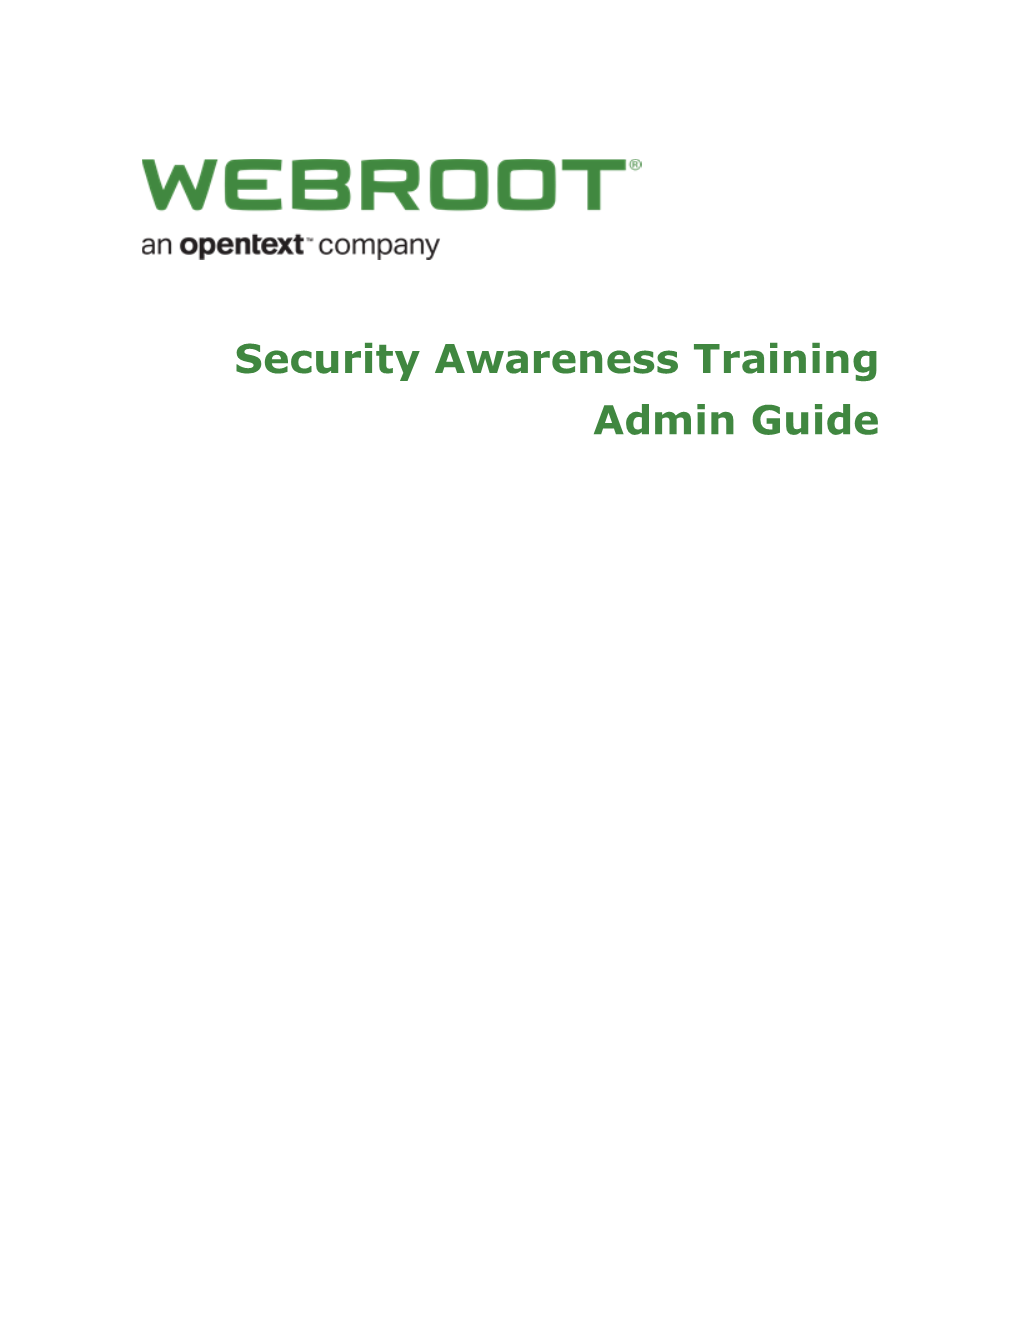 Security Awareness Training Admin Guide